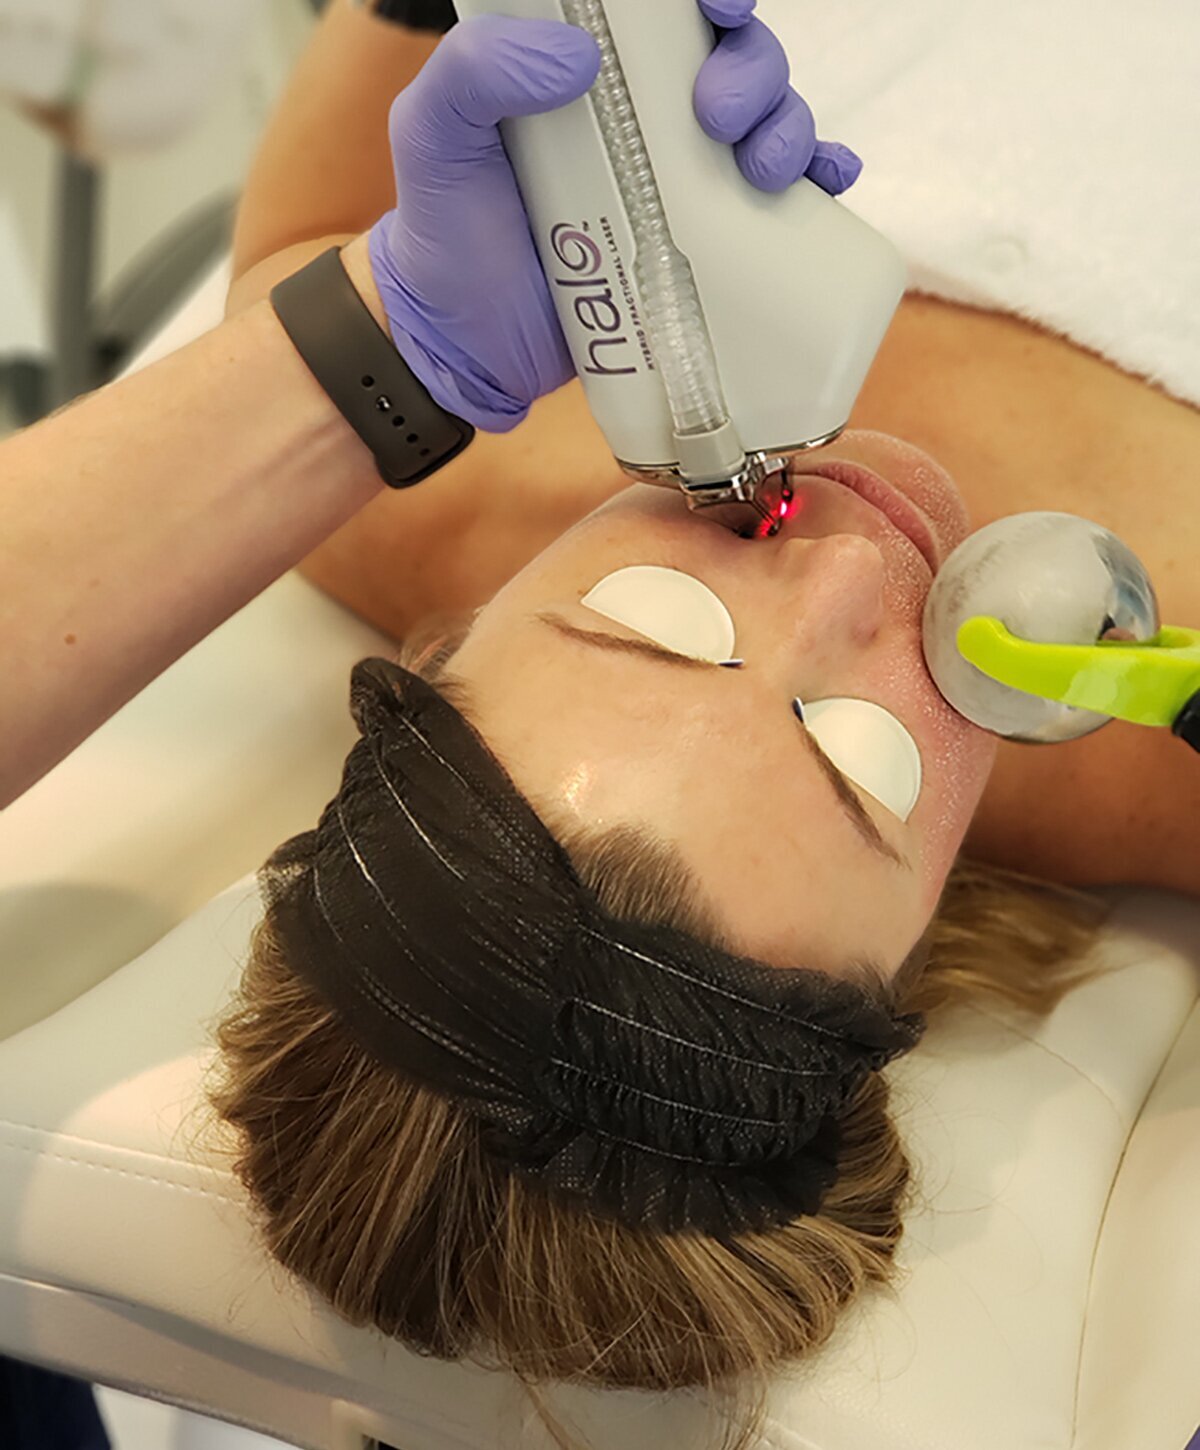 Vero Beach laser skin resurfacing patient receiving treatment